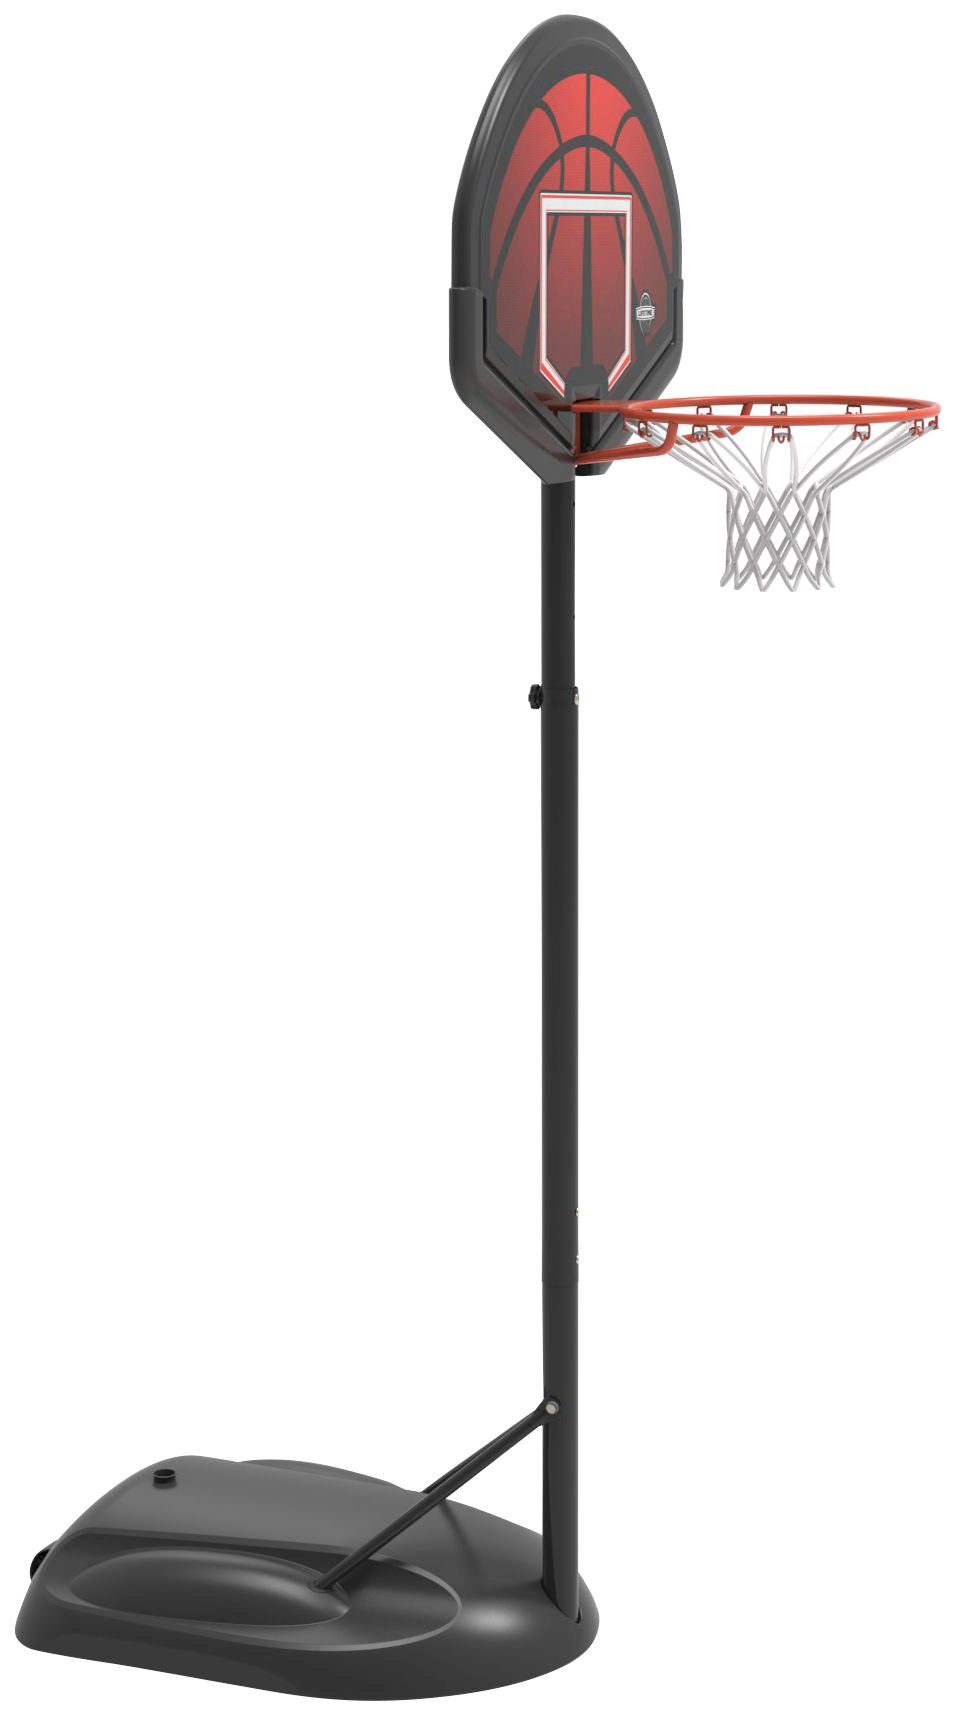 Basketballkorb höhenverstellbar Alabama, 50NRTH schwarz/rot